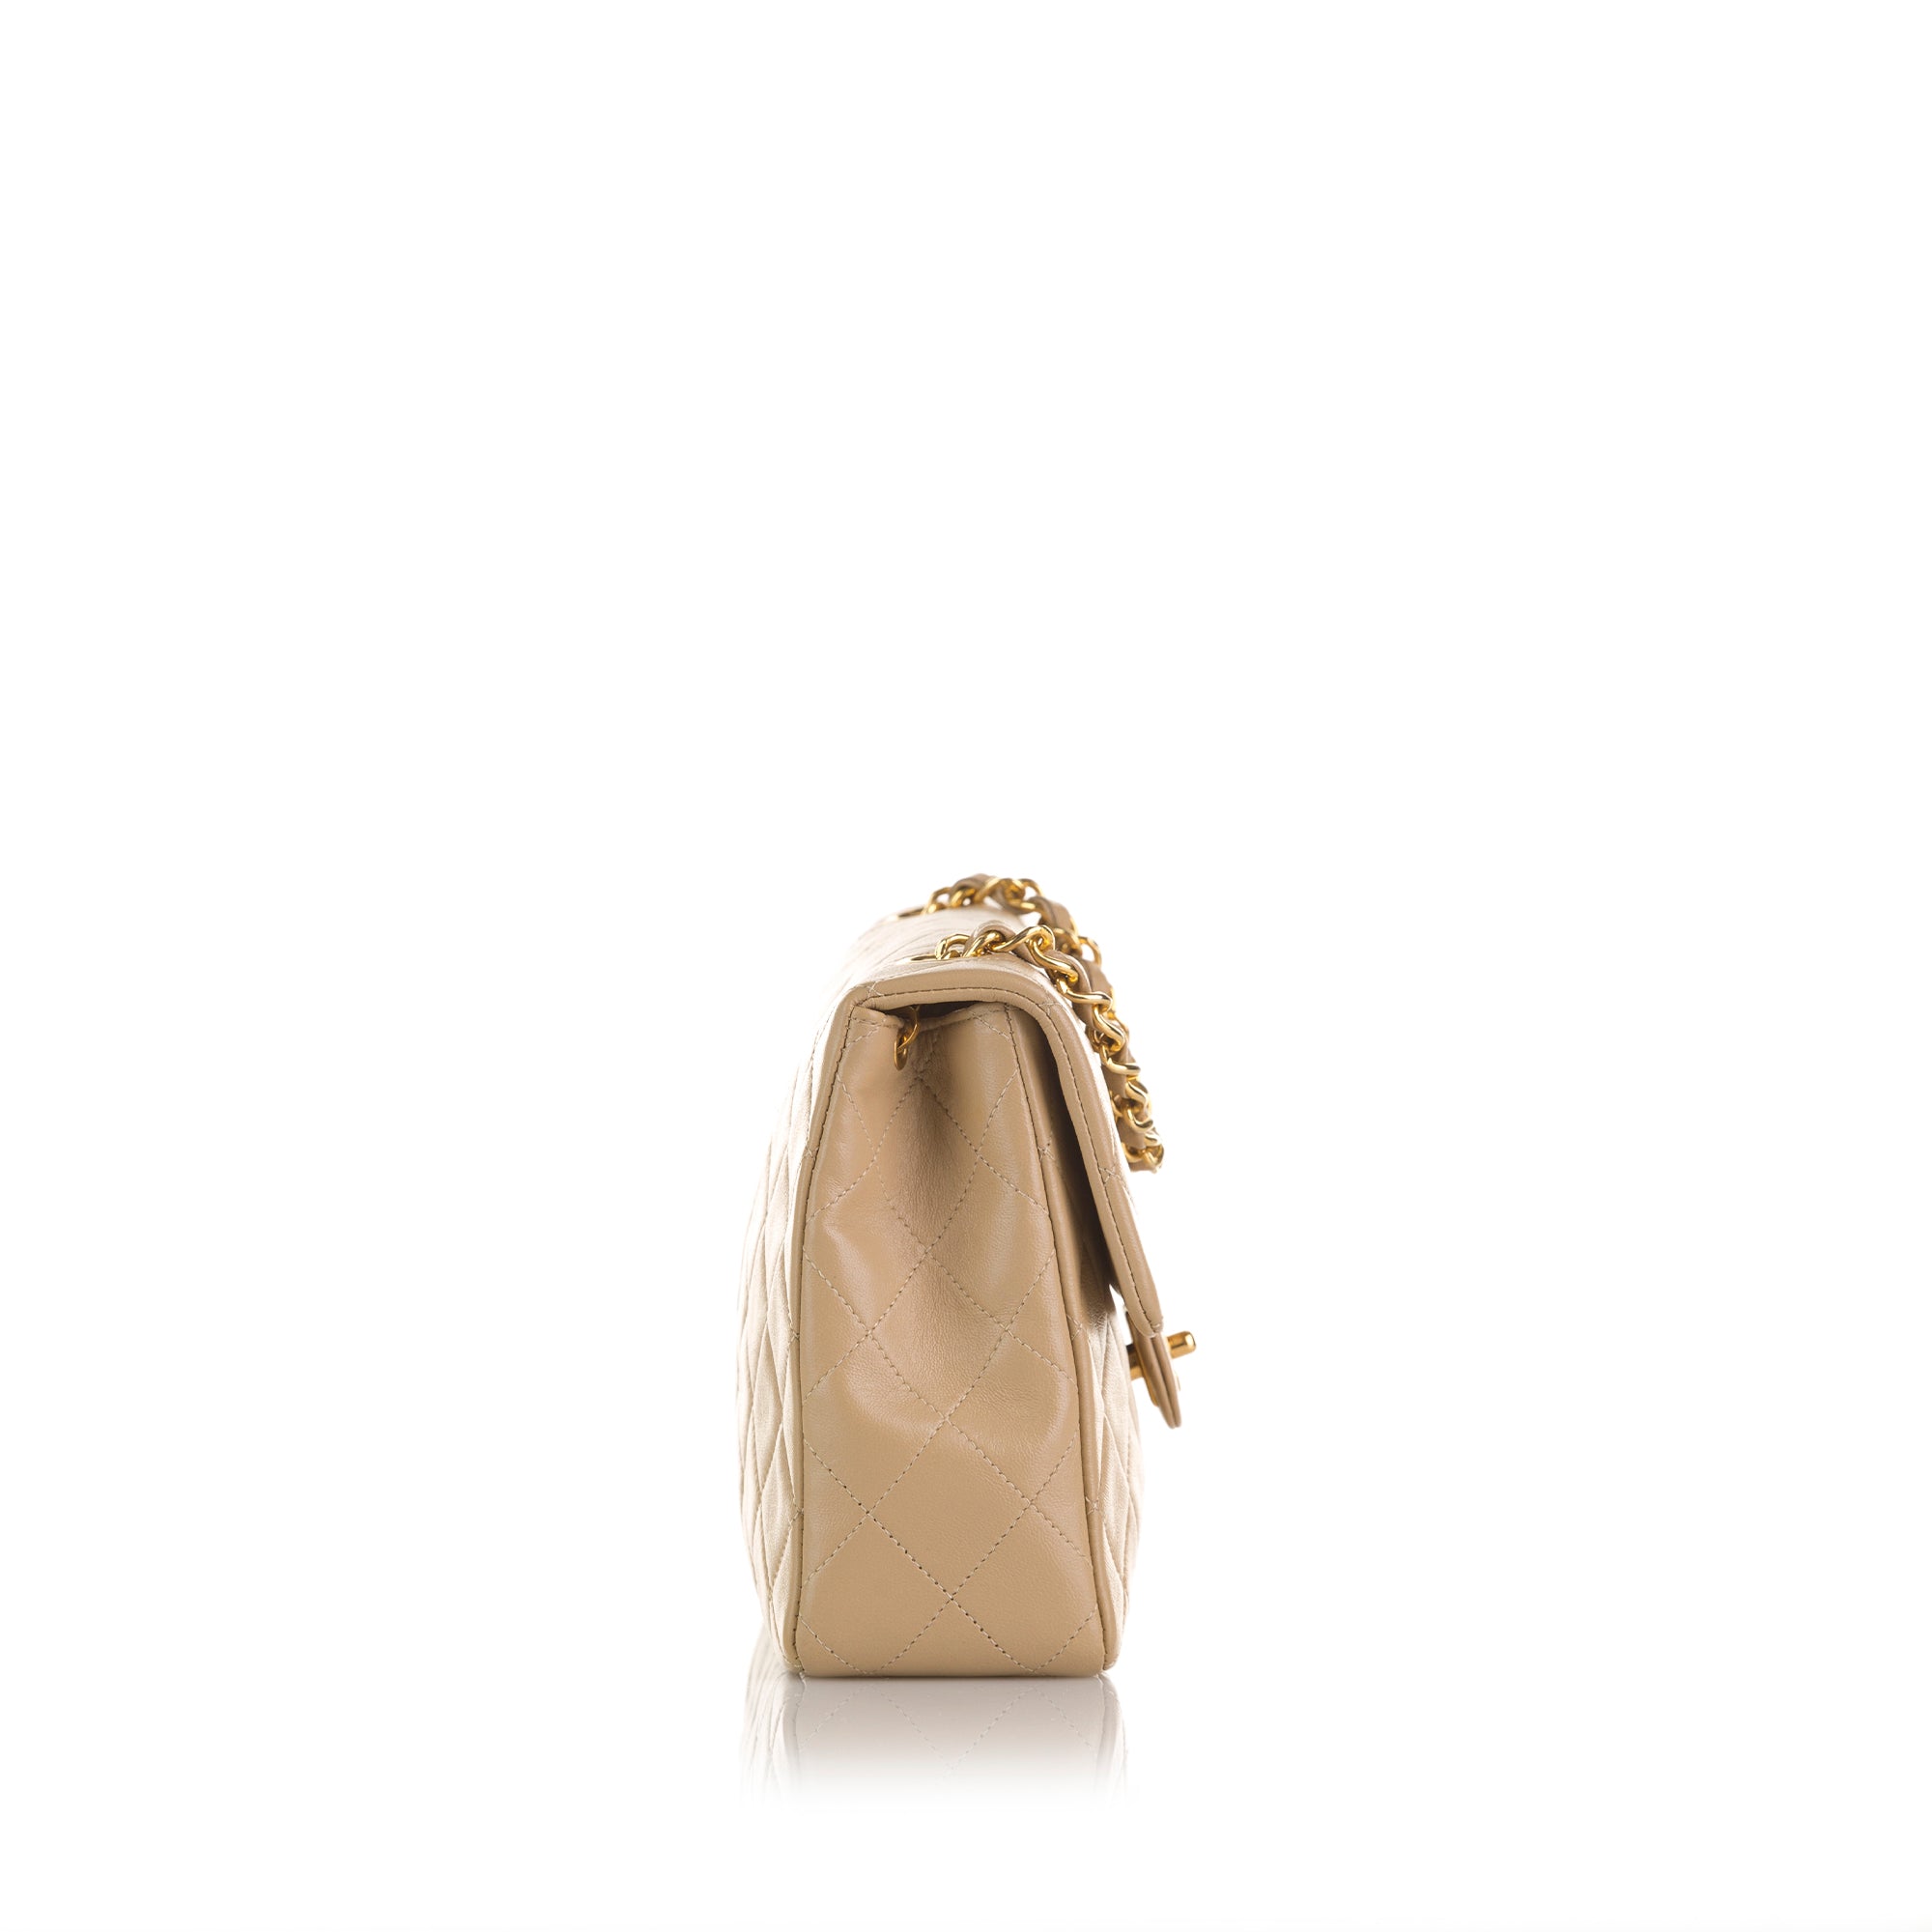 Chanel Medium Creme Lambskin Double Flap Bag - shop 